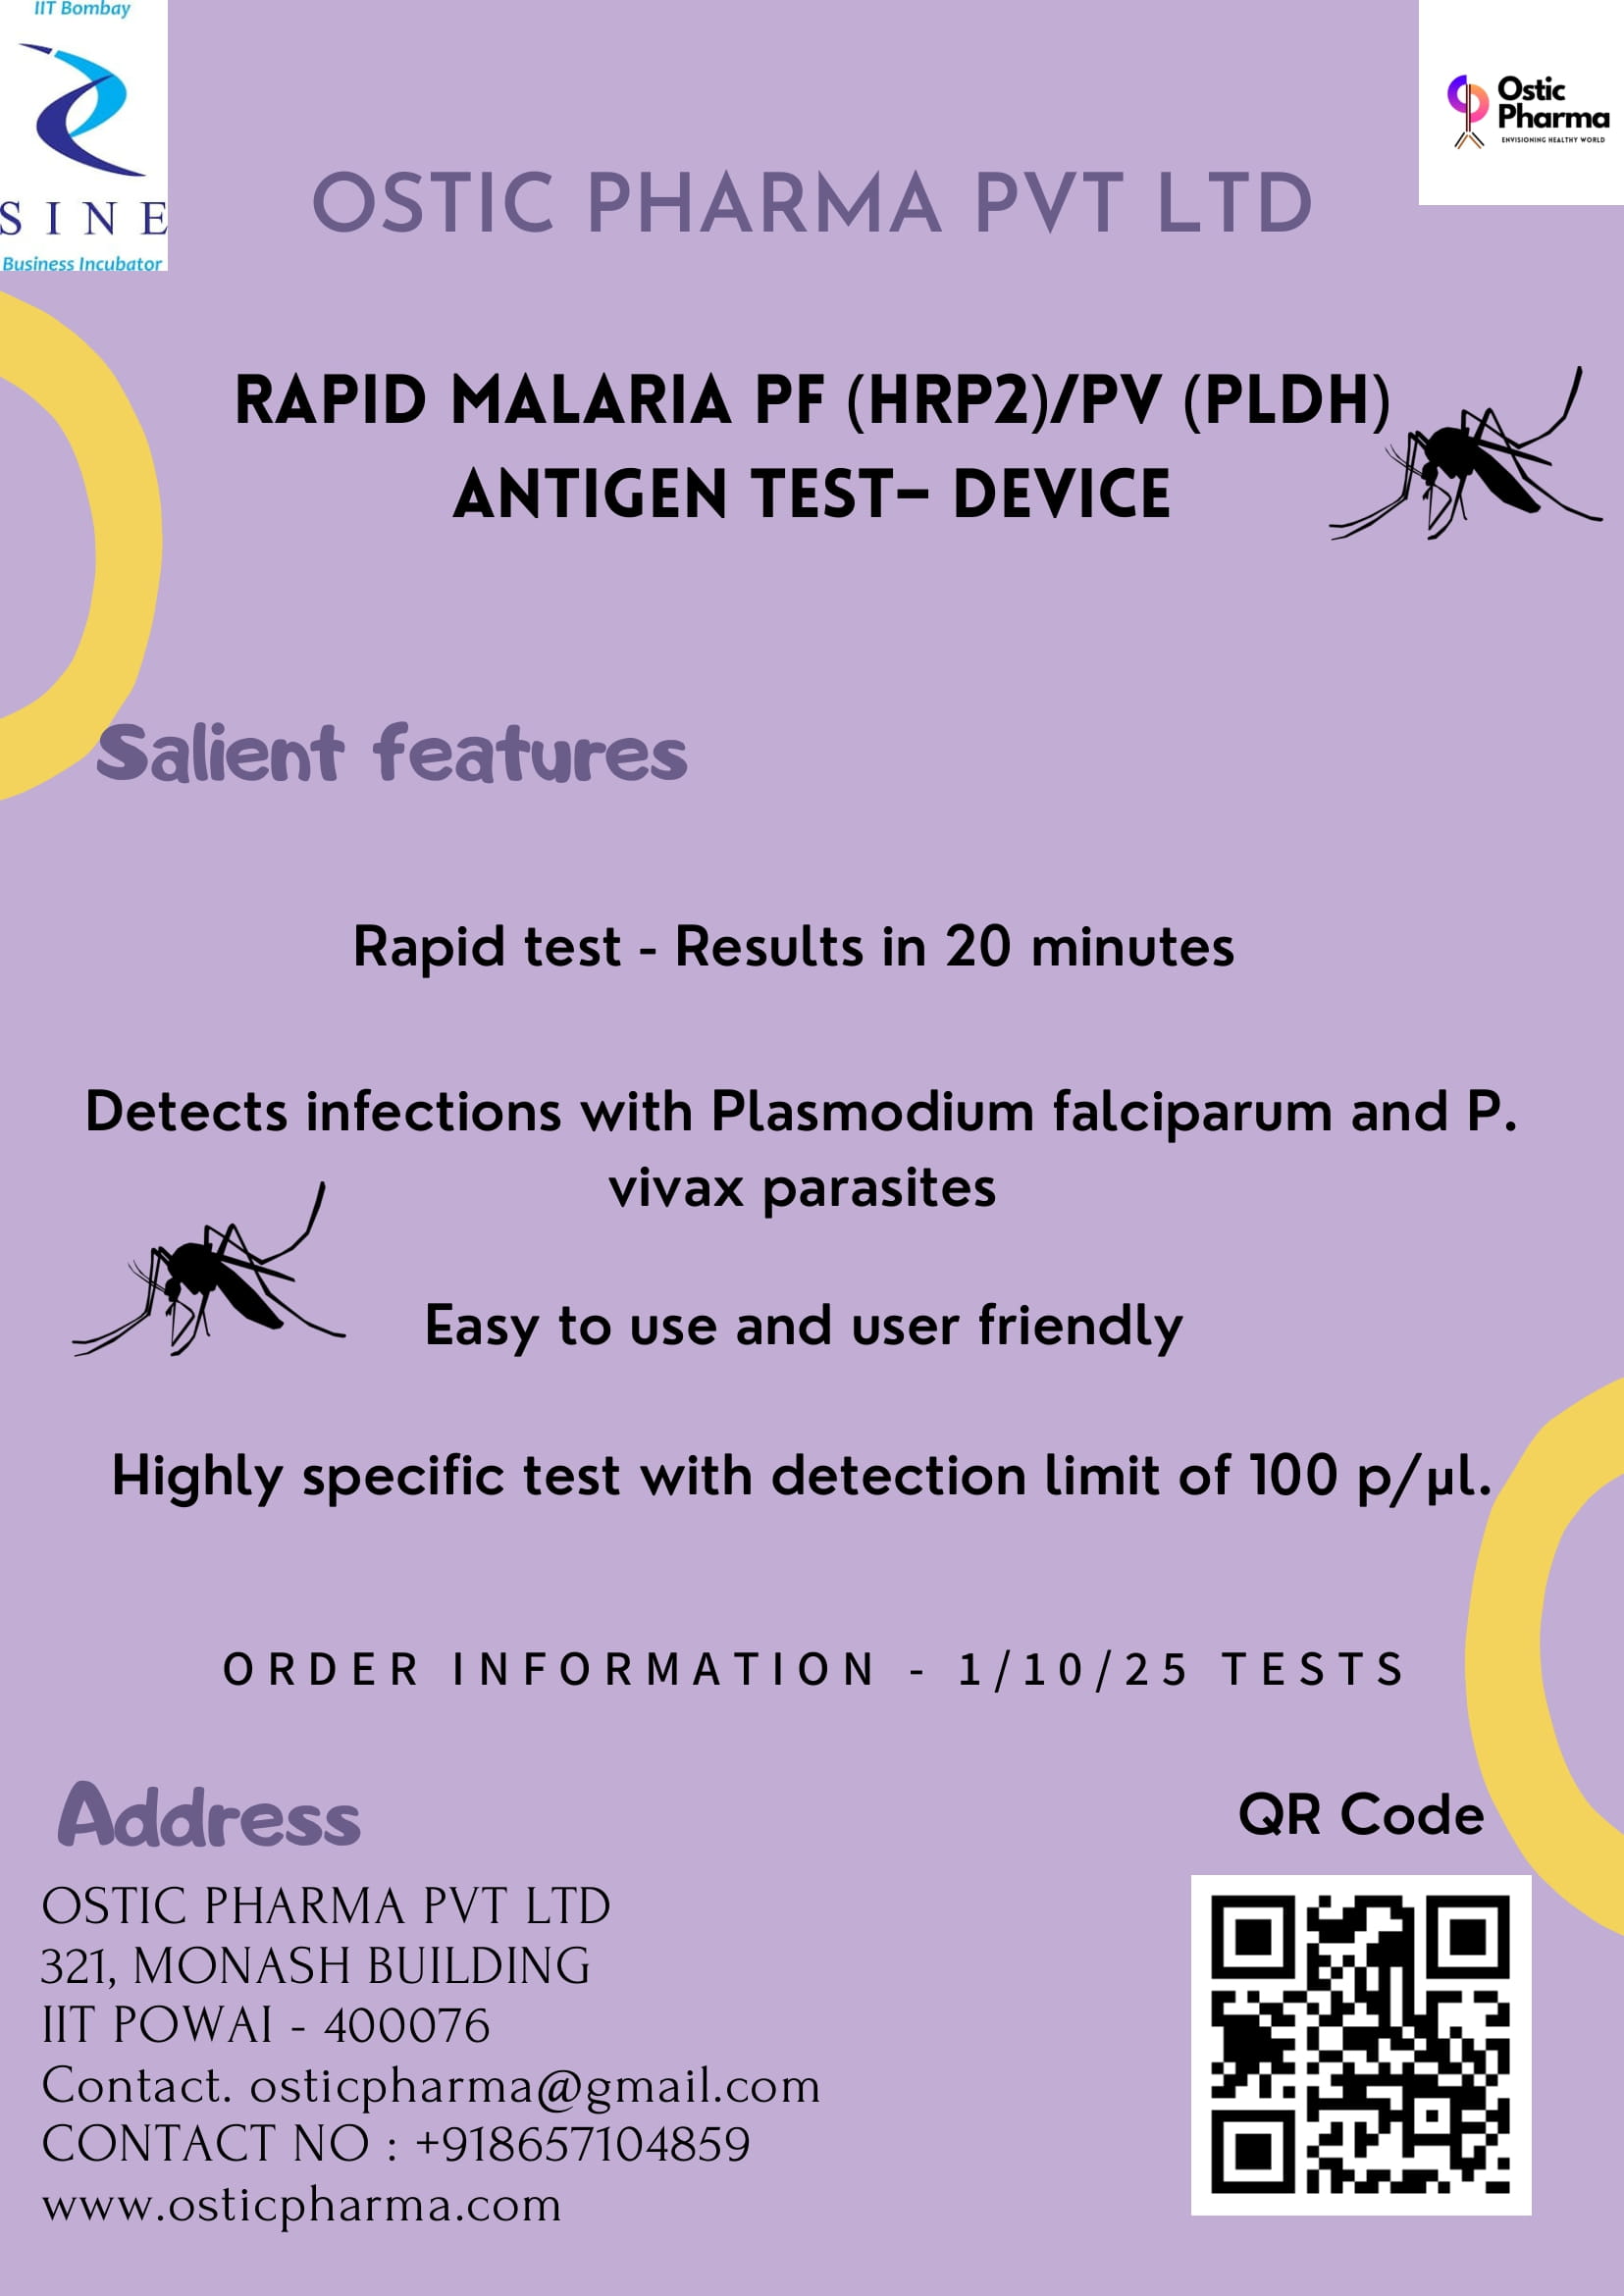 RAPID MALARIA PF OR PV ANTIGEN TEST DEVICE